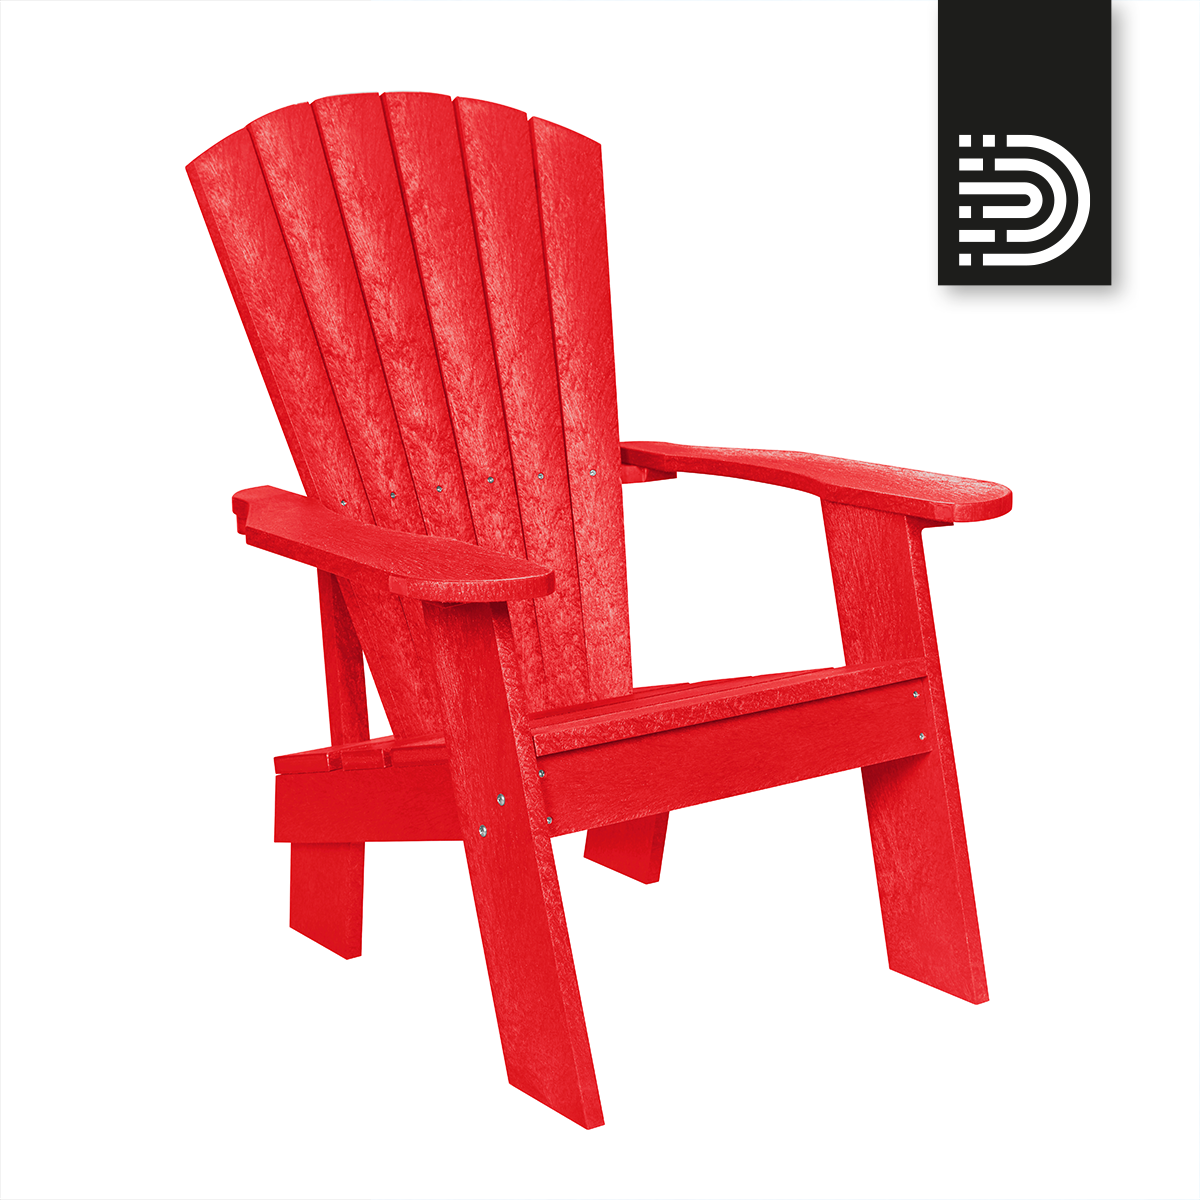 C09 Original Adirondack Chair- red 01